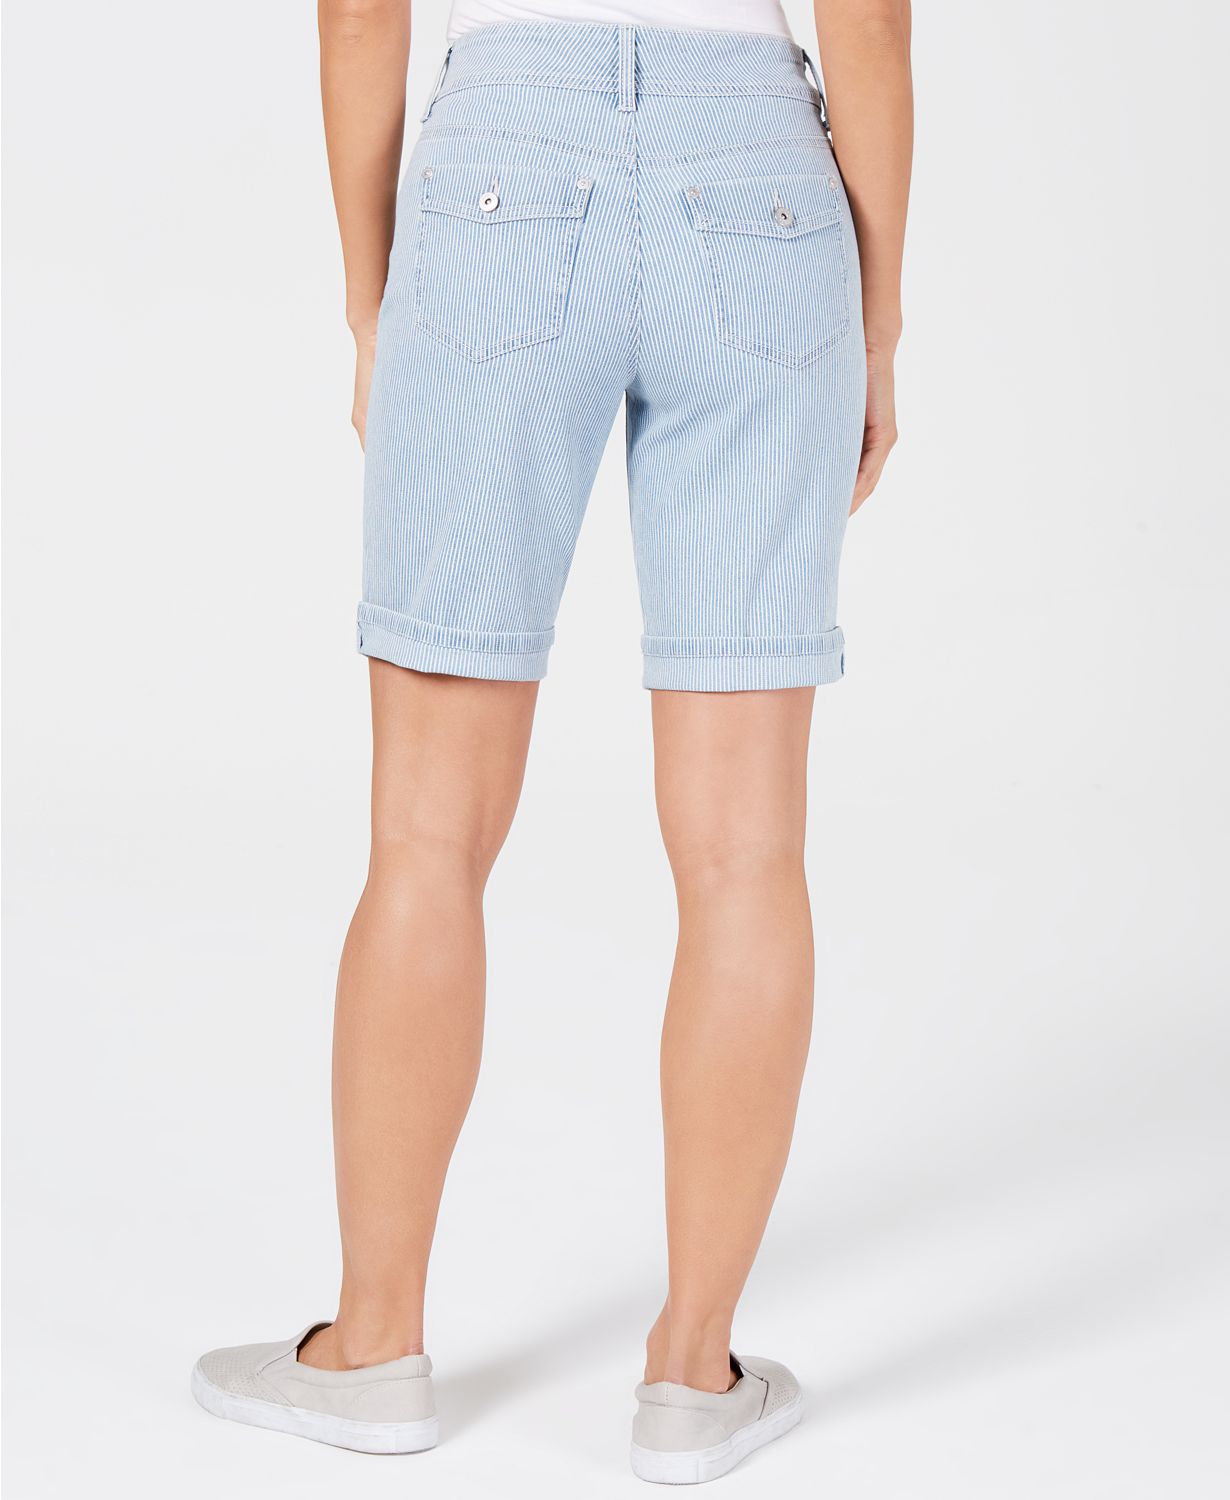 Style & Co Womens Petite Railroad Cuffed Jean Shorts